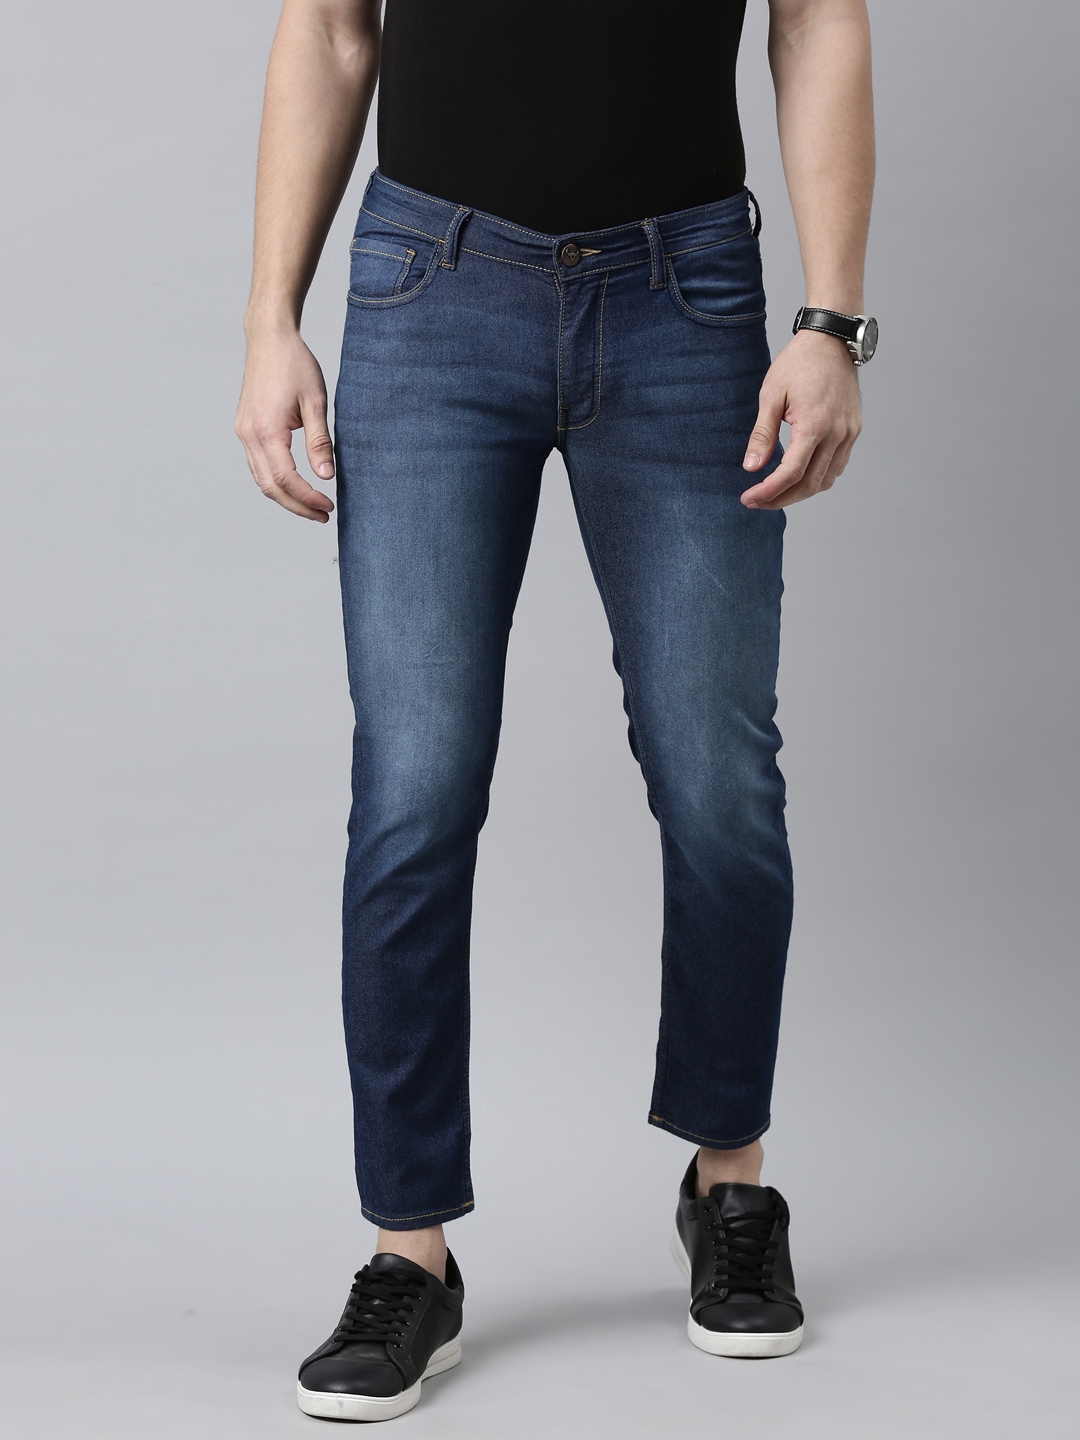 American Bull | American Bull Mens Solid Ankle Length Denim Jeans 0